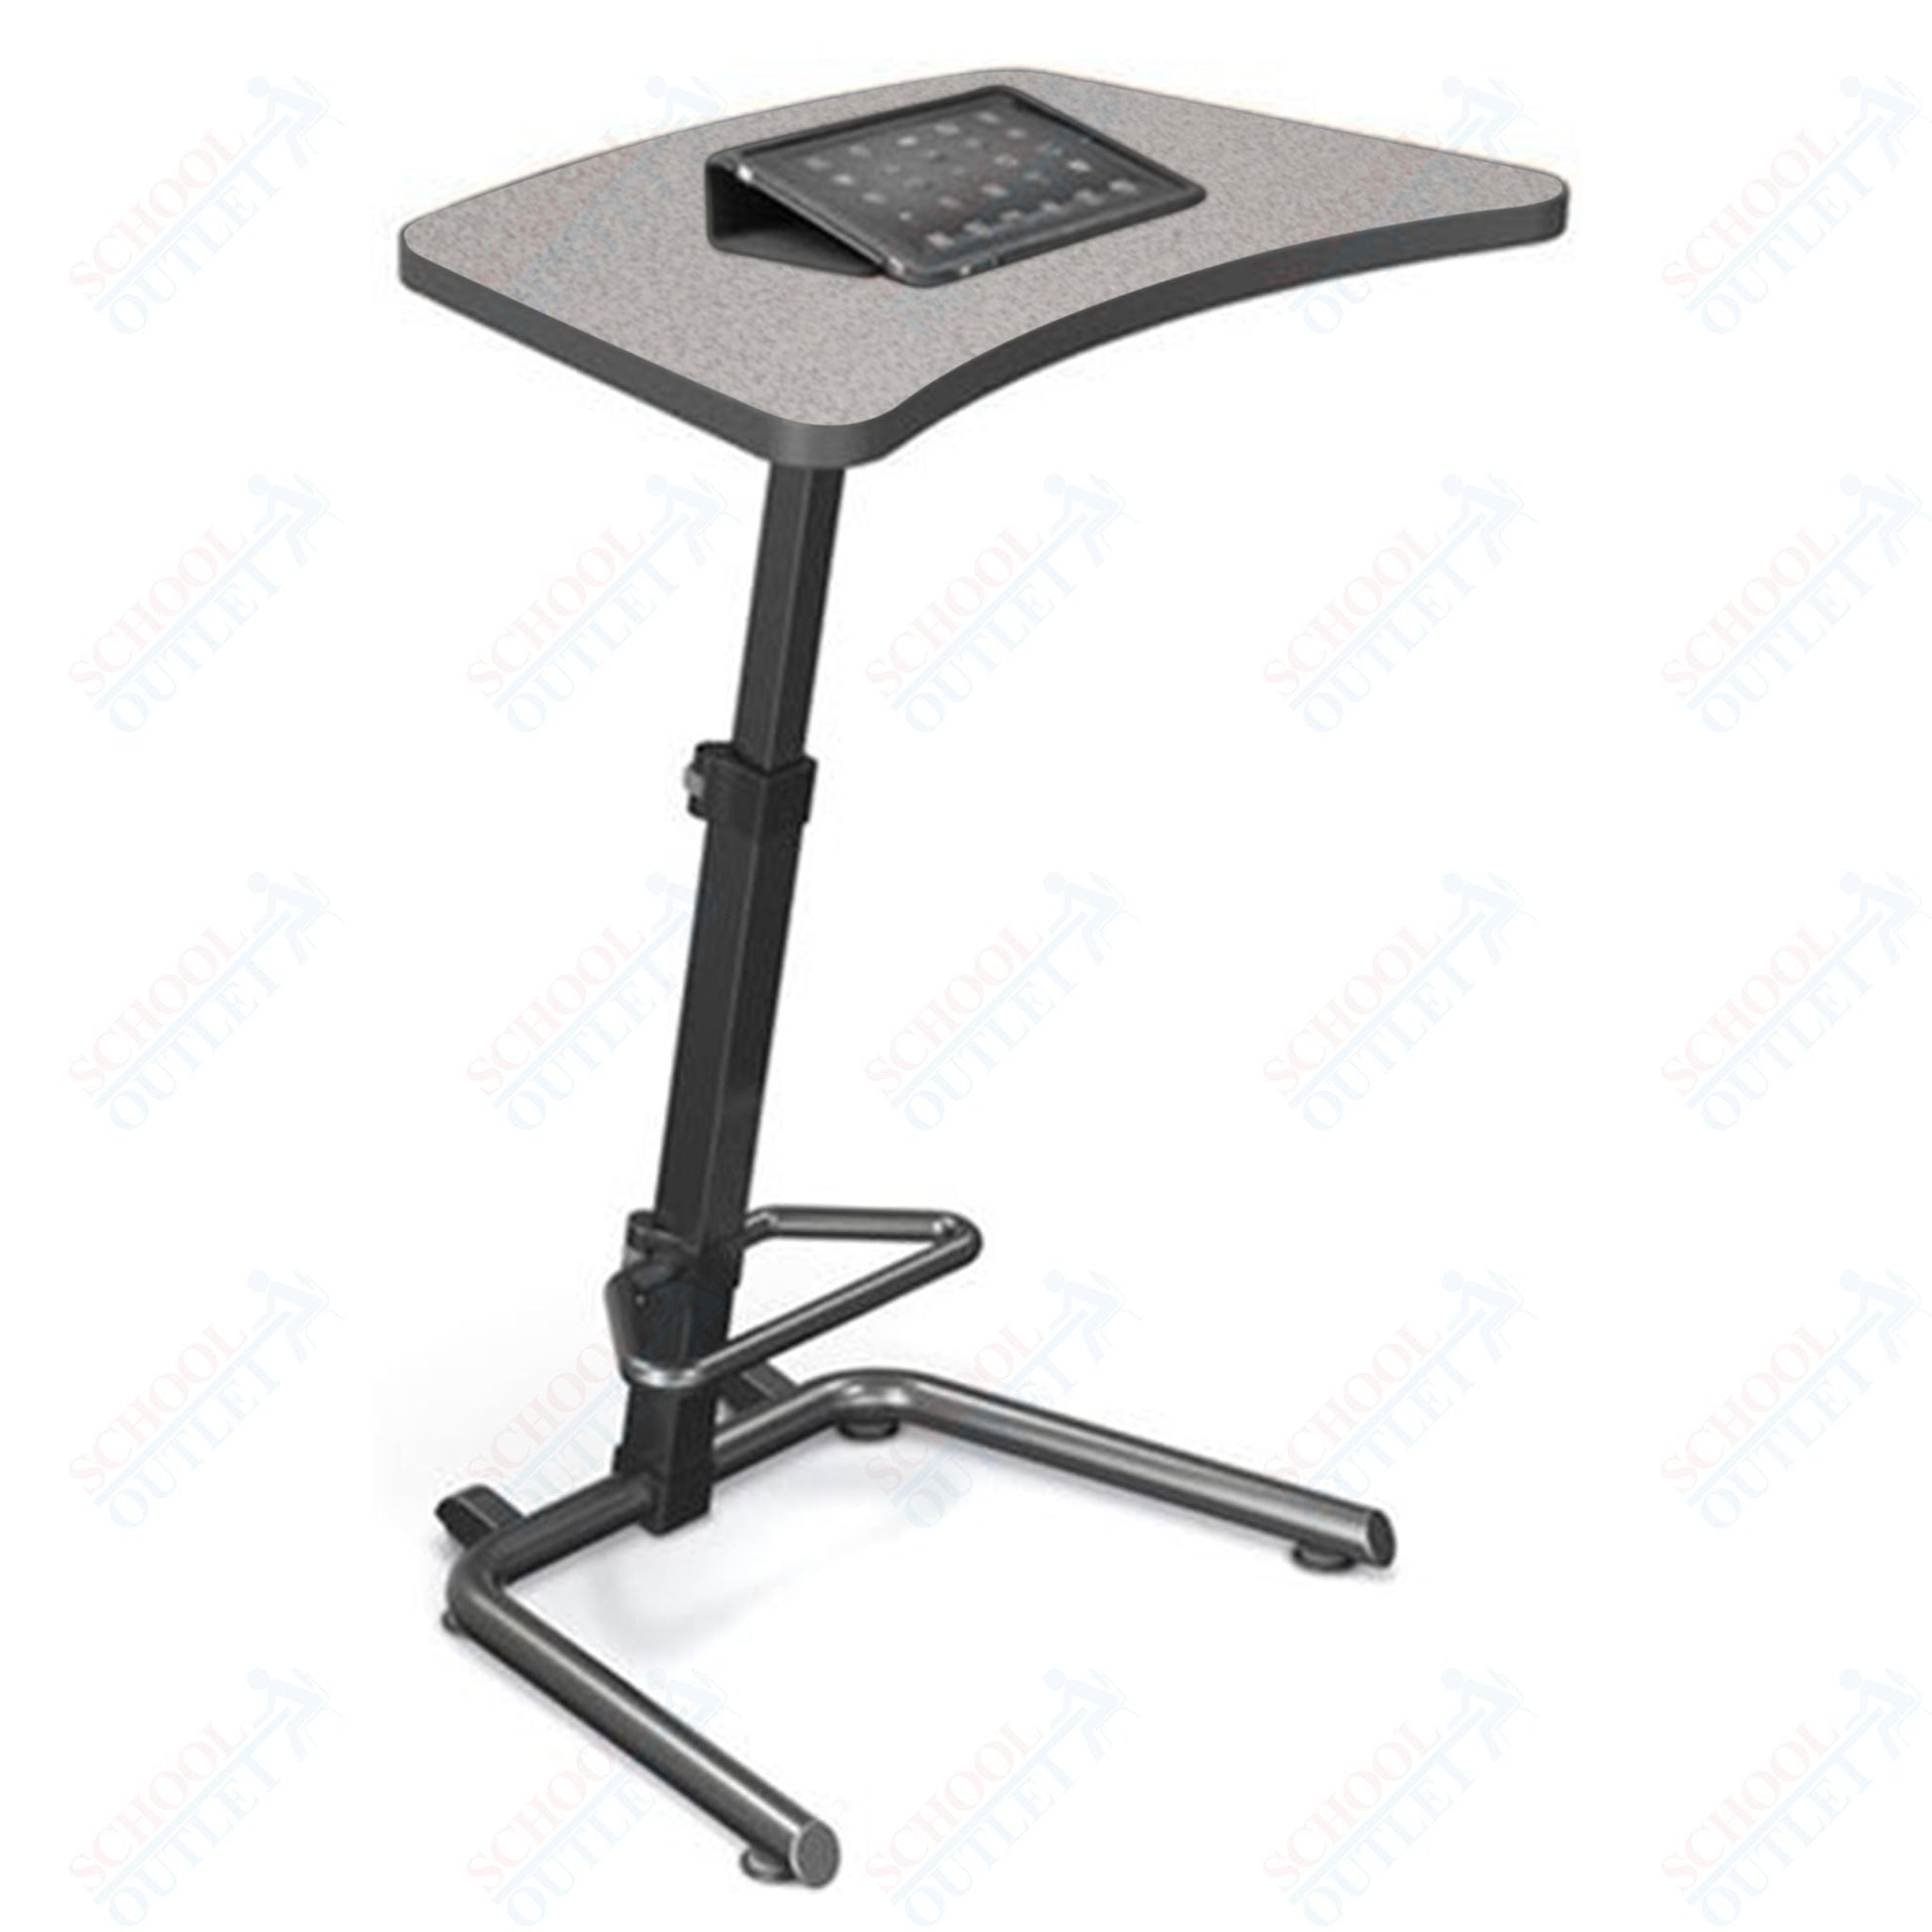 Mooreco Up - Rite Student Table - Backer Back Surface - Black Edgeband (Mooreco 90532) - SchoolOutlet